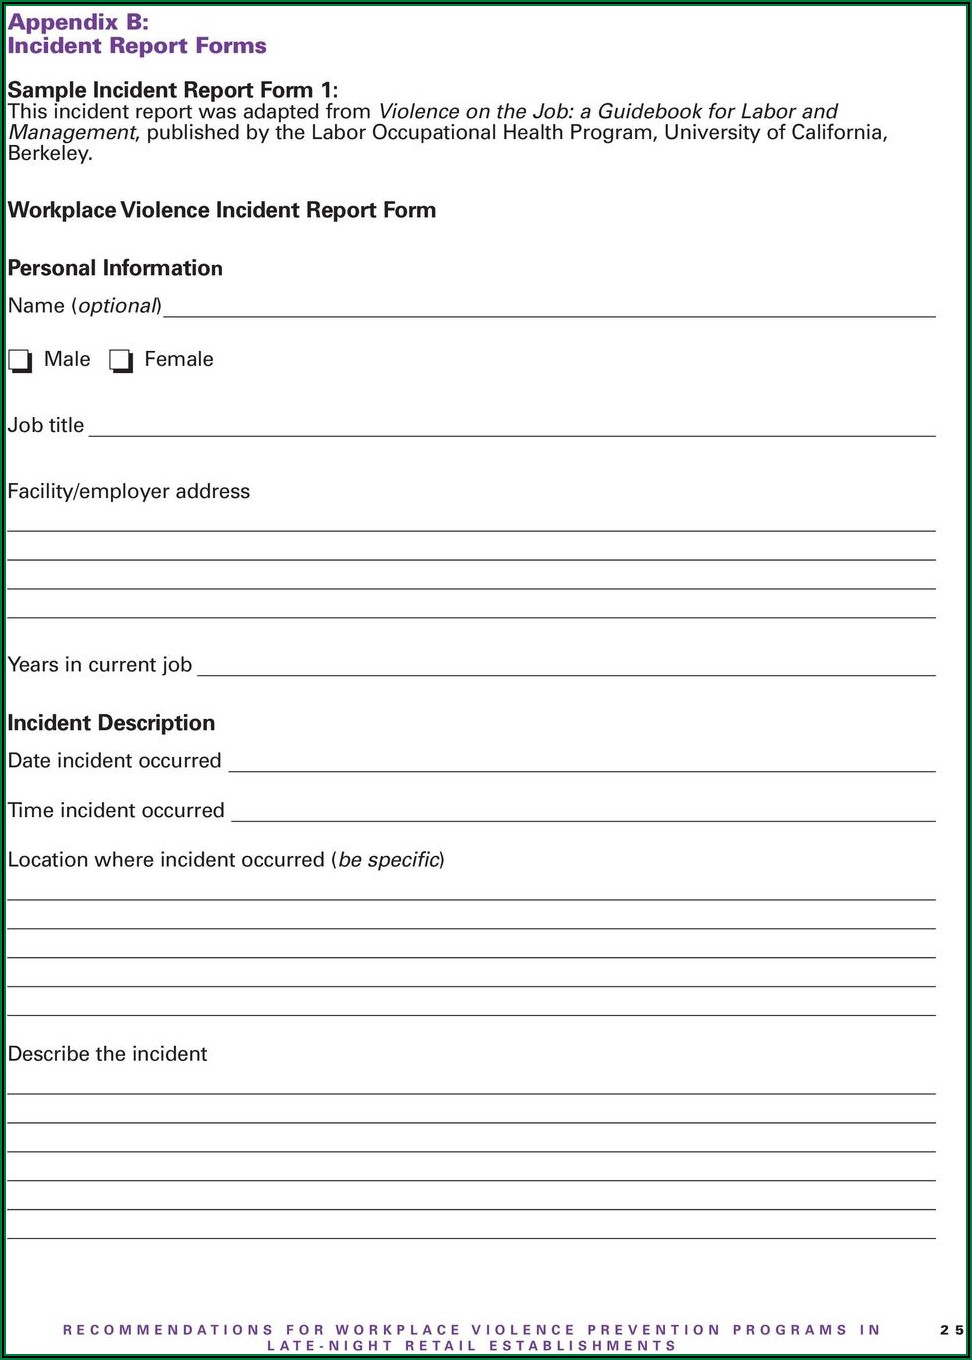 Workplace Violence Incident Report Form Sample